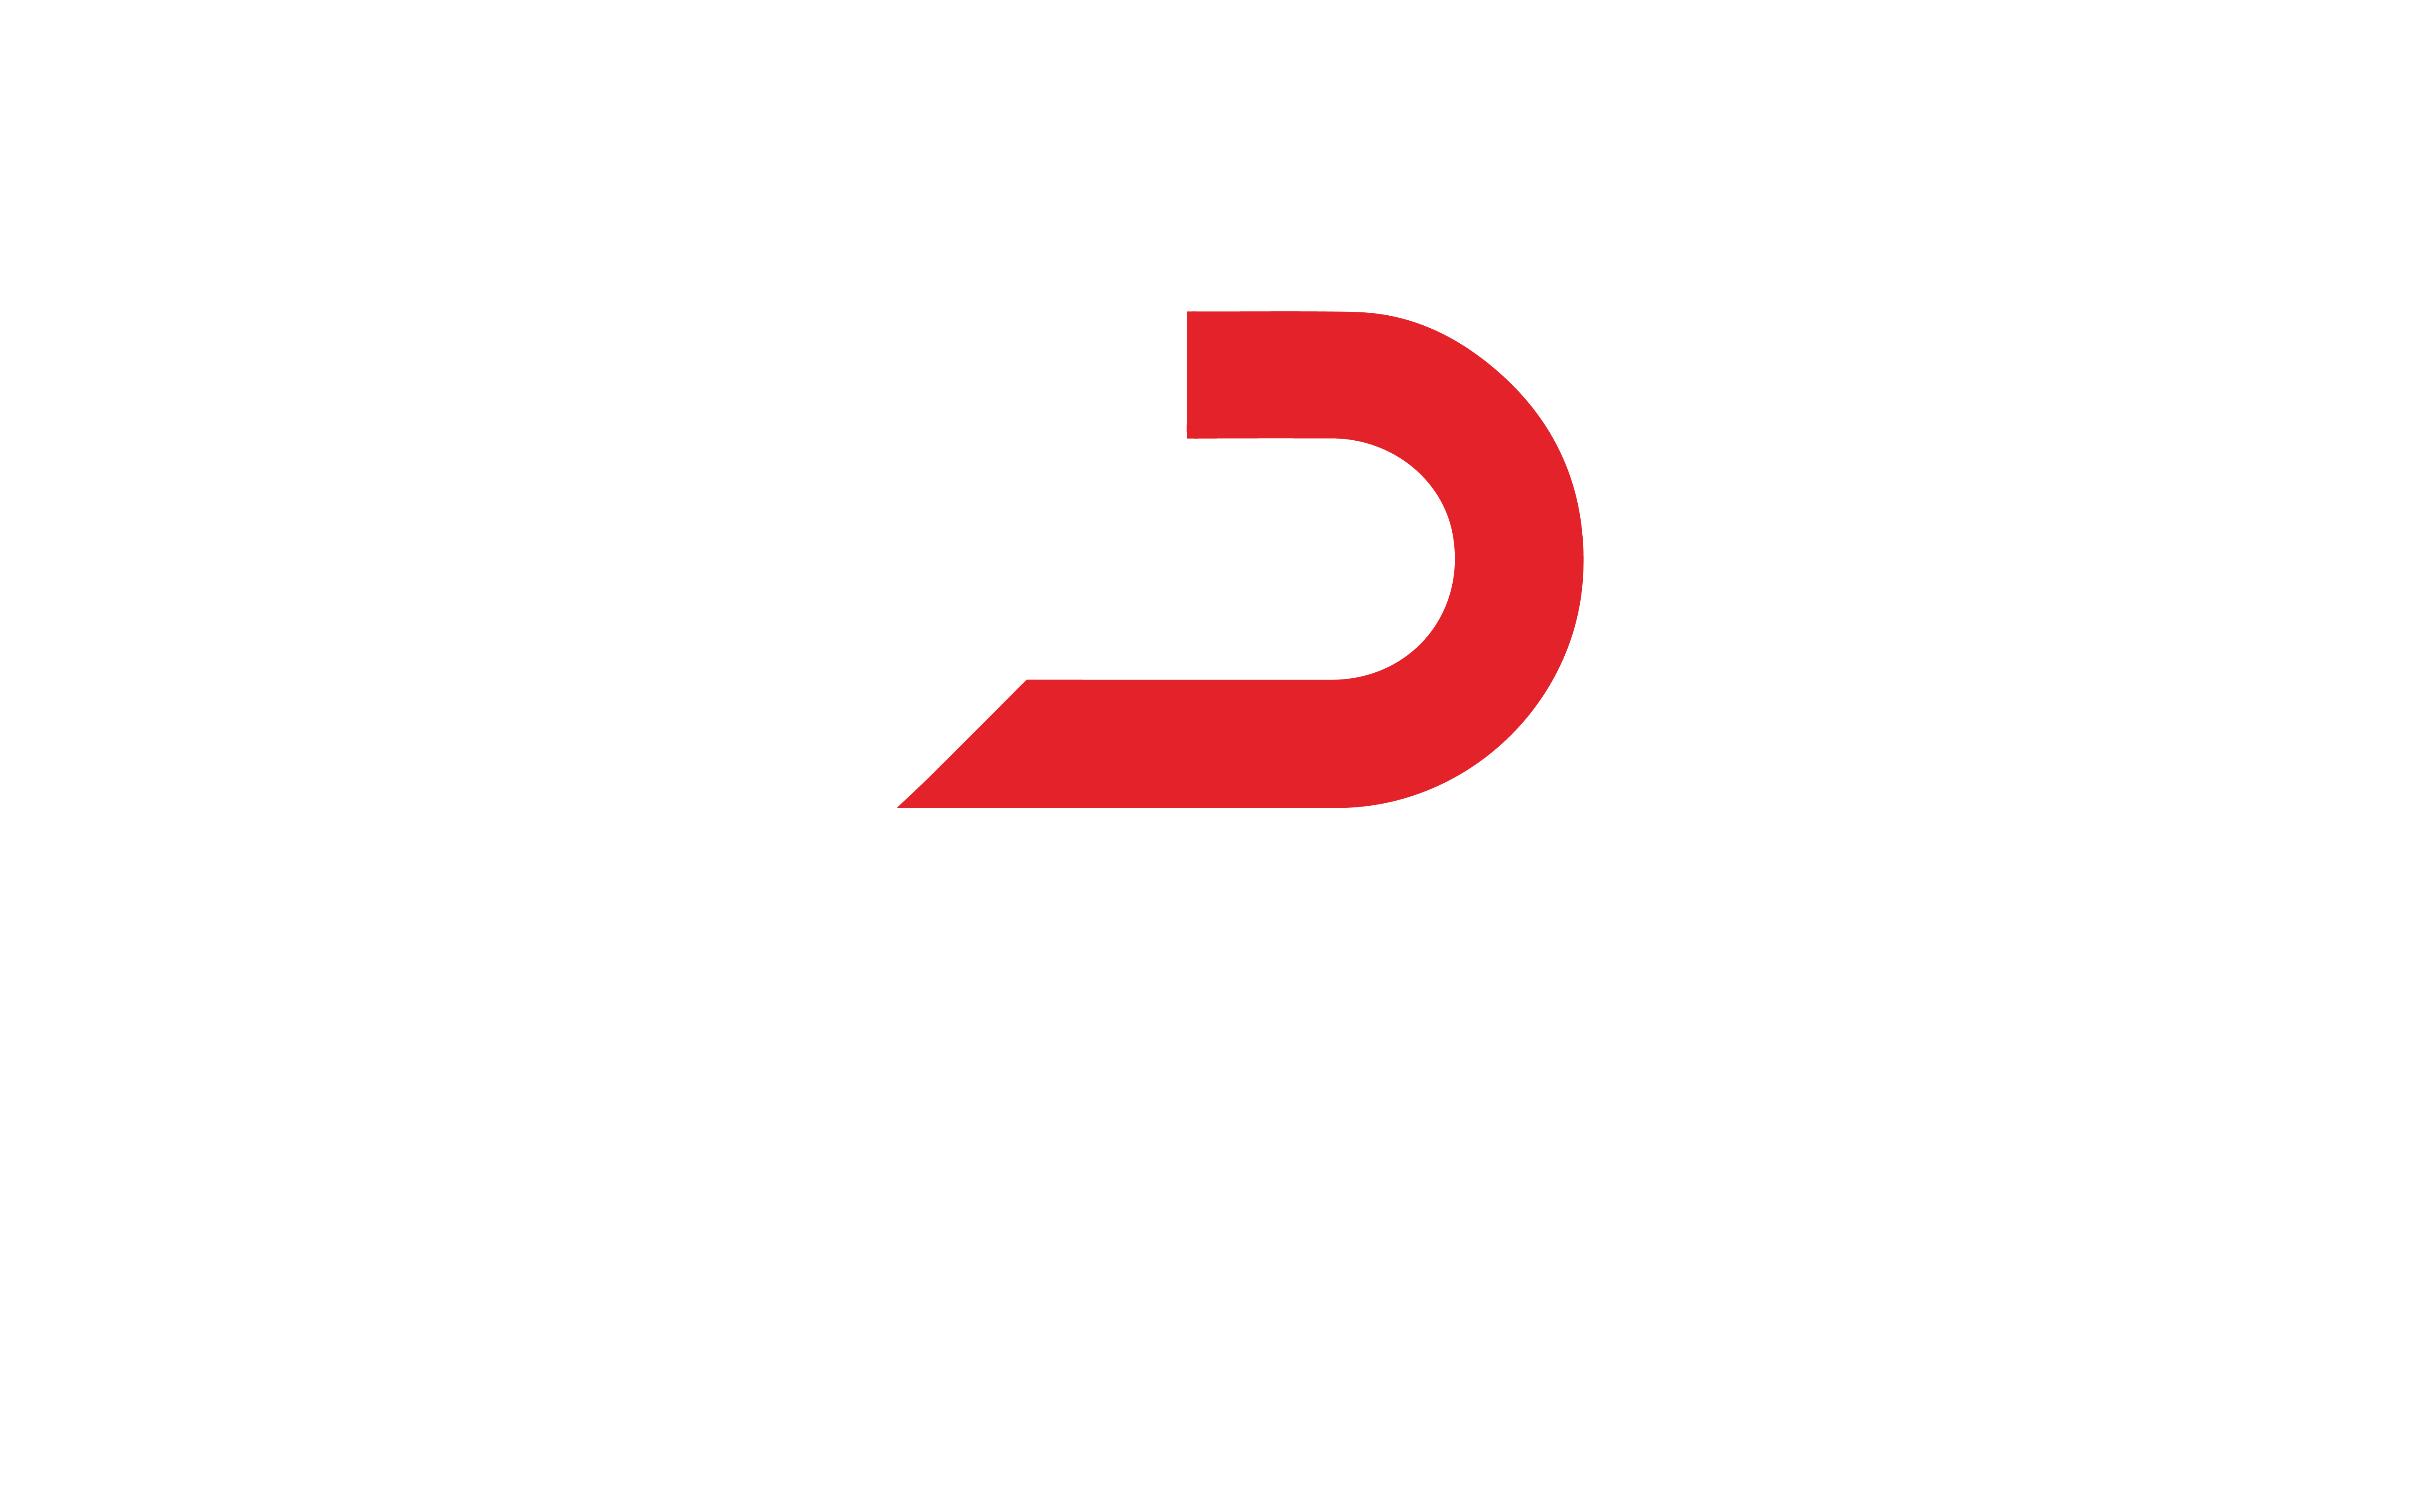 mdf logo